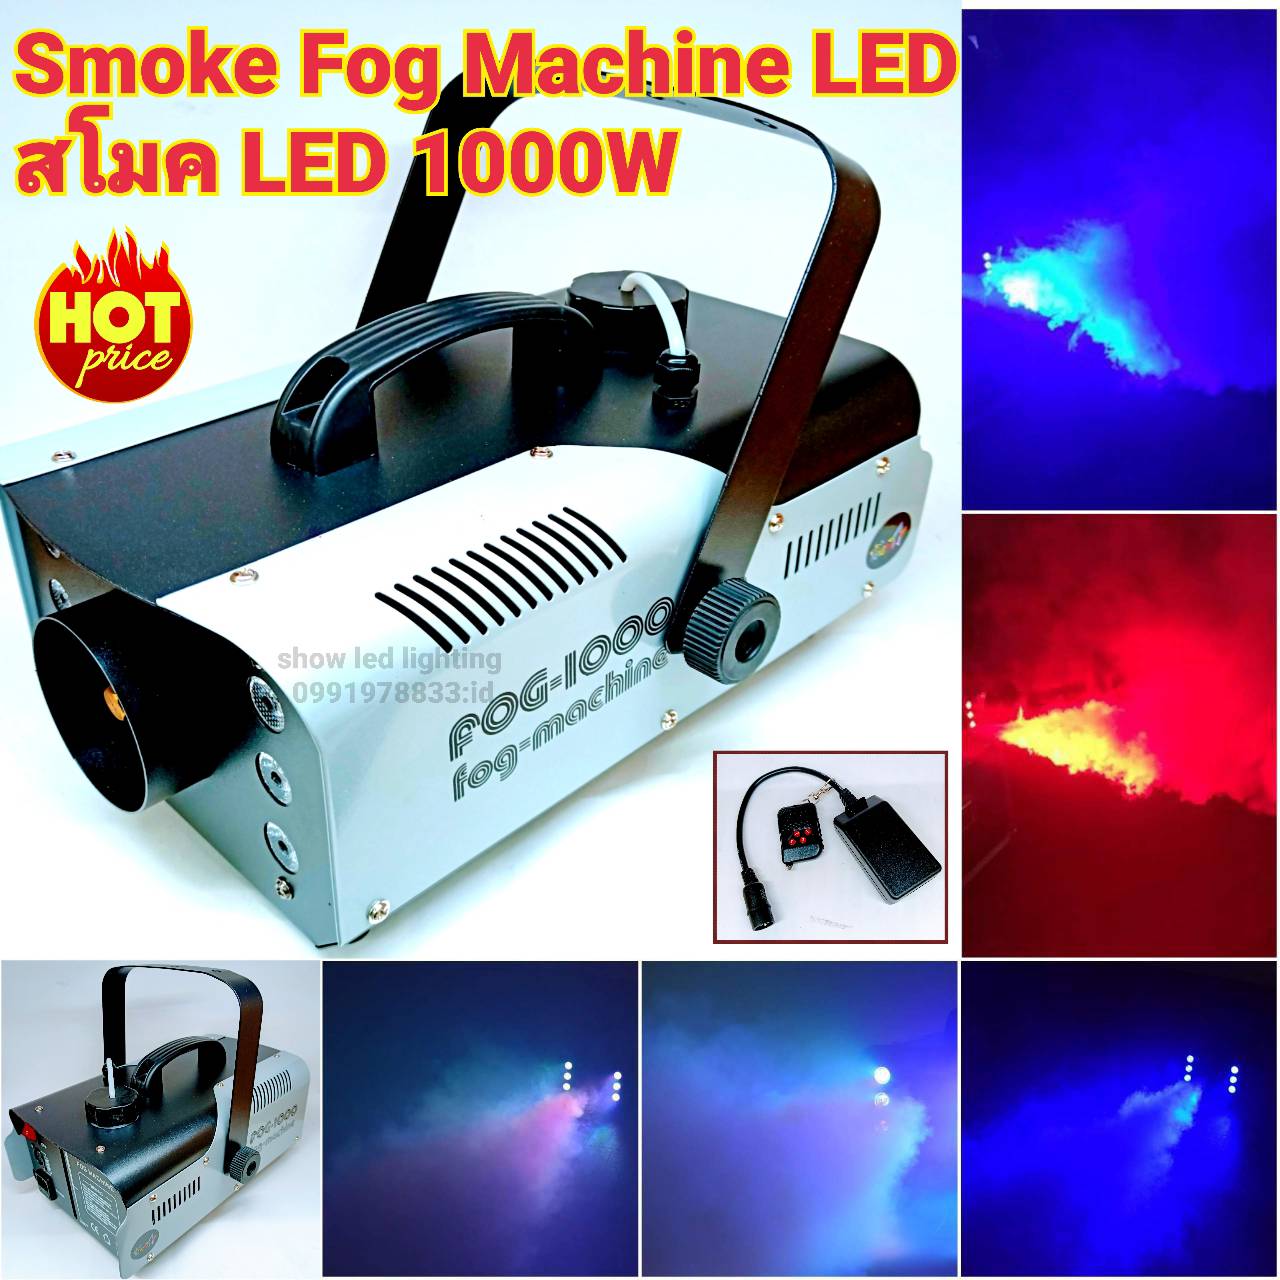 Smoke 1000w LED Fog machine สโมค1000w มีรีโมทเครื่องทำควันเครื่องทำไดรไอซ์ สำหรับไฟดิสโก้เลเซอร์